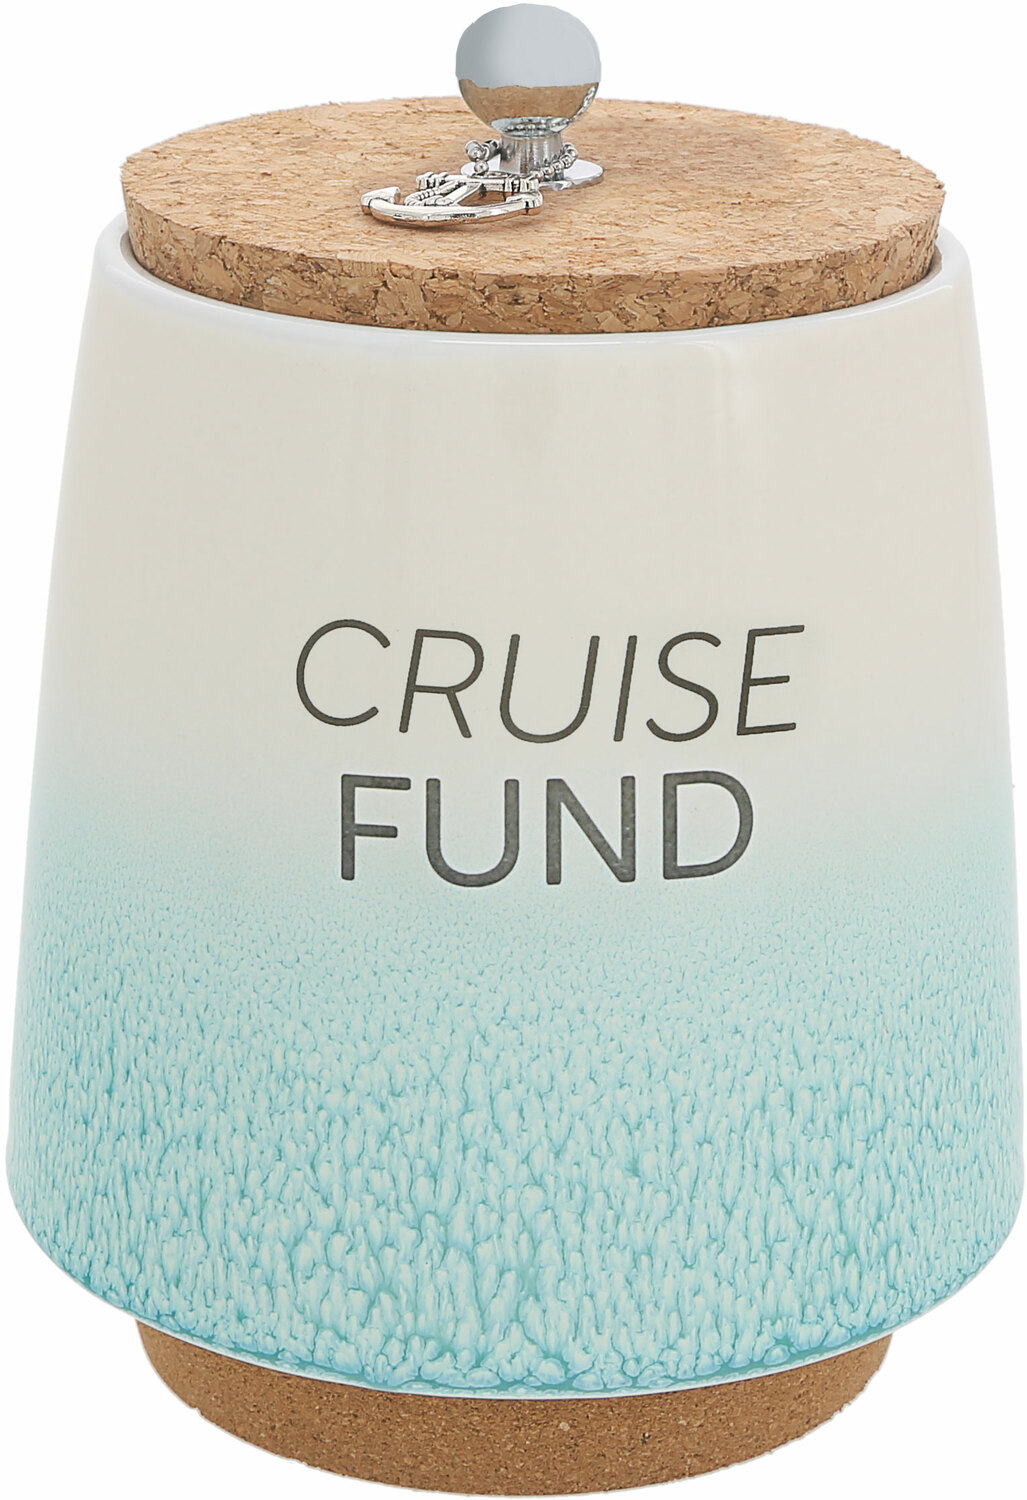 Cruise by So Much Fun-d - Cruise - 6.5" Ceramic Savings Bank